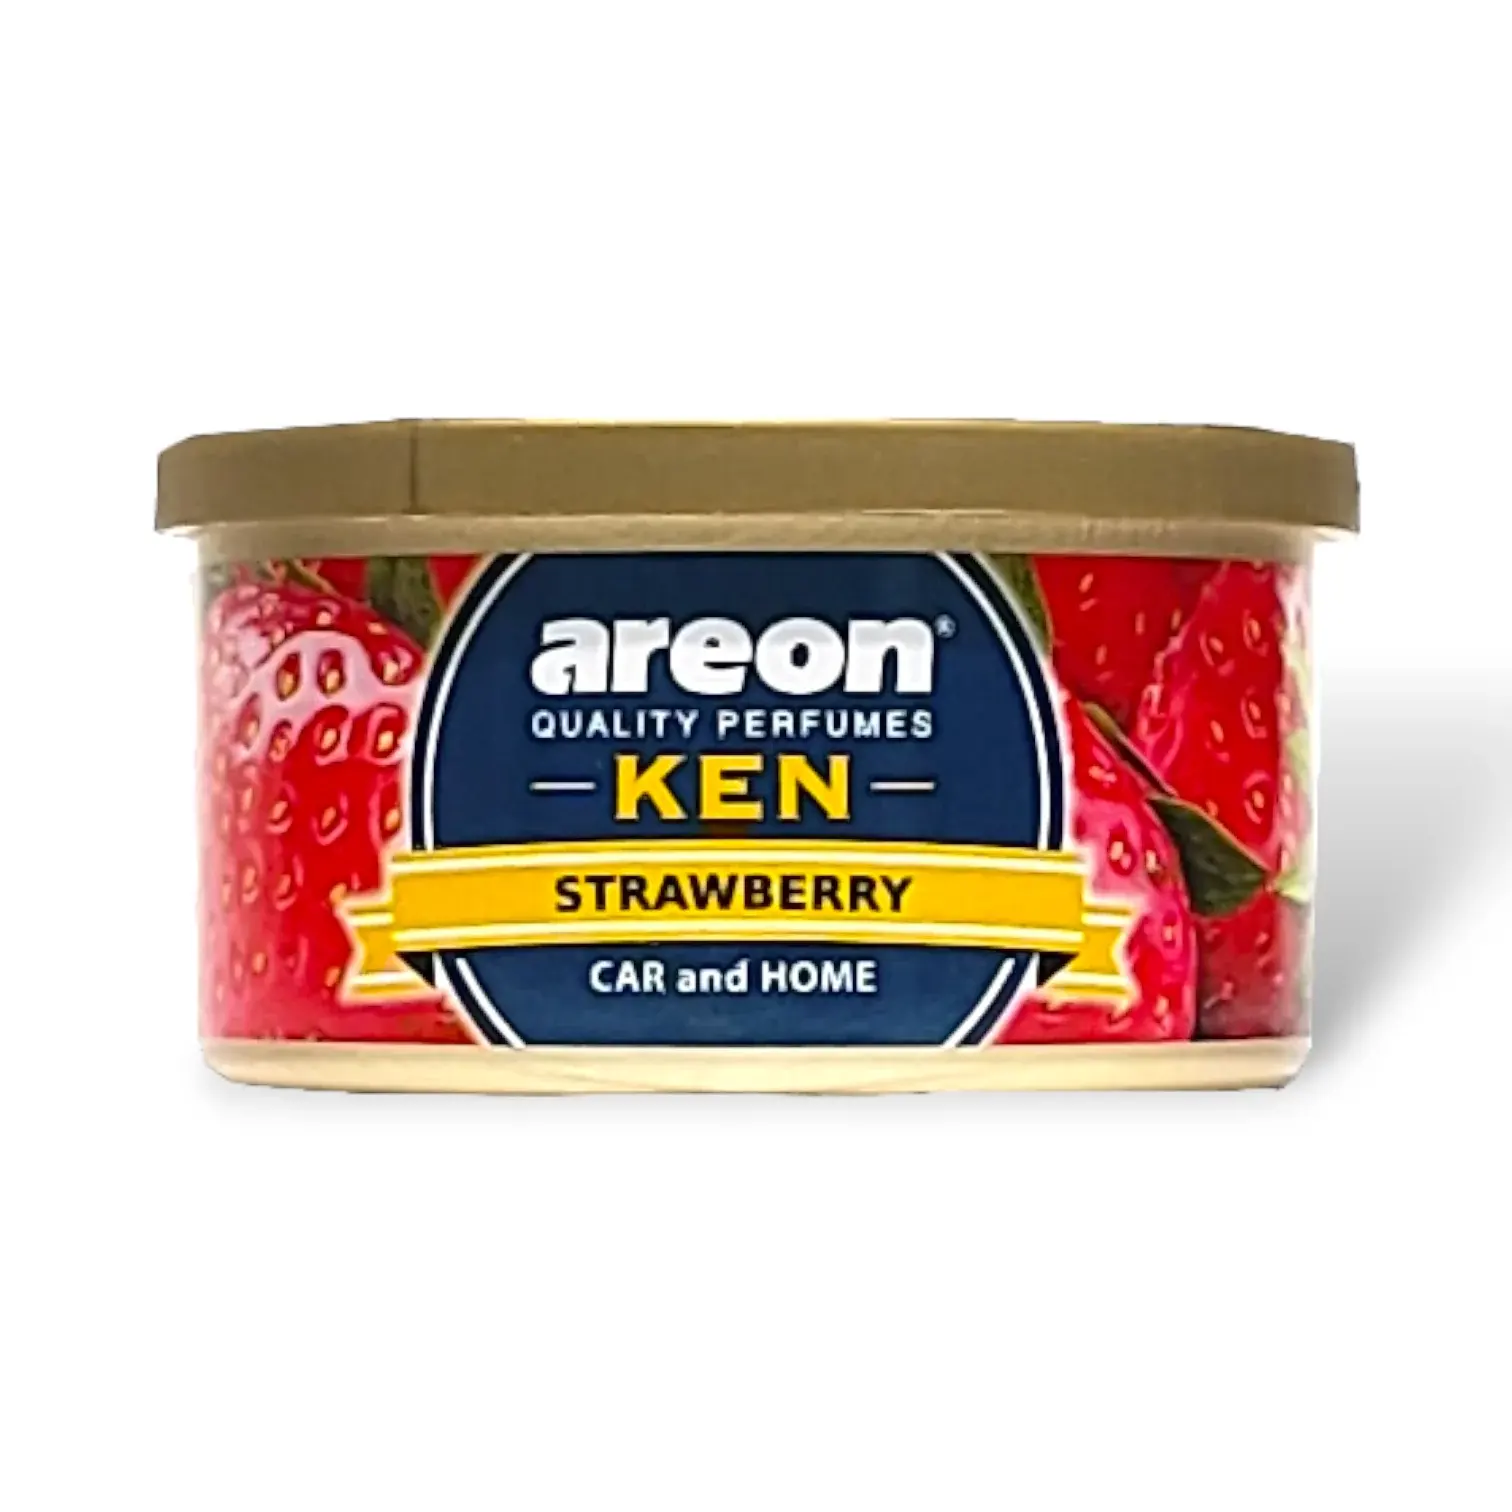 Parfum mobil AREON Ken-Strawberry, paket 1, AK01